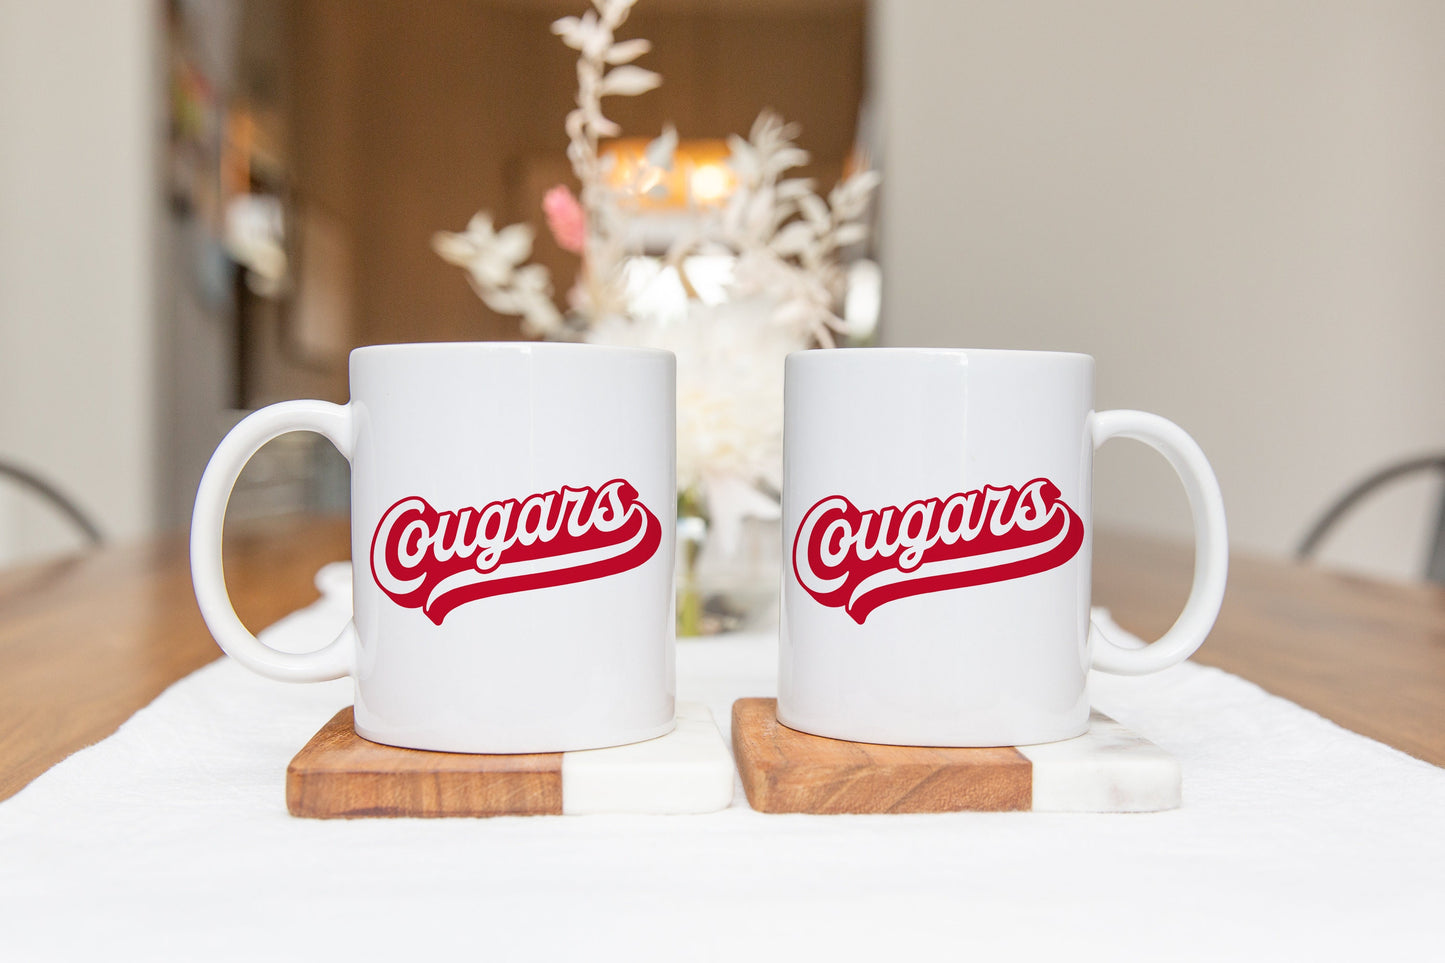 Cougars Mug